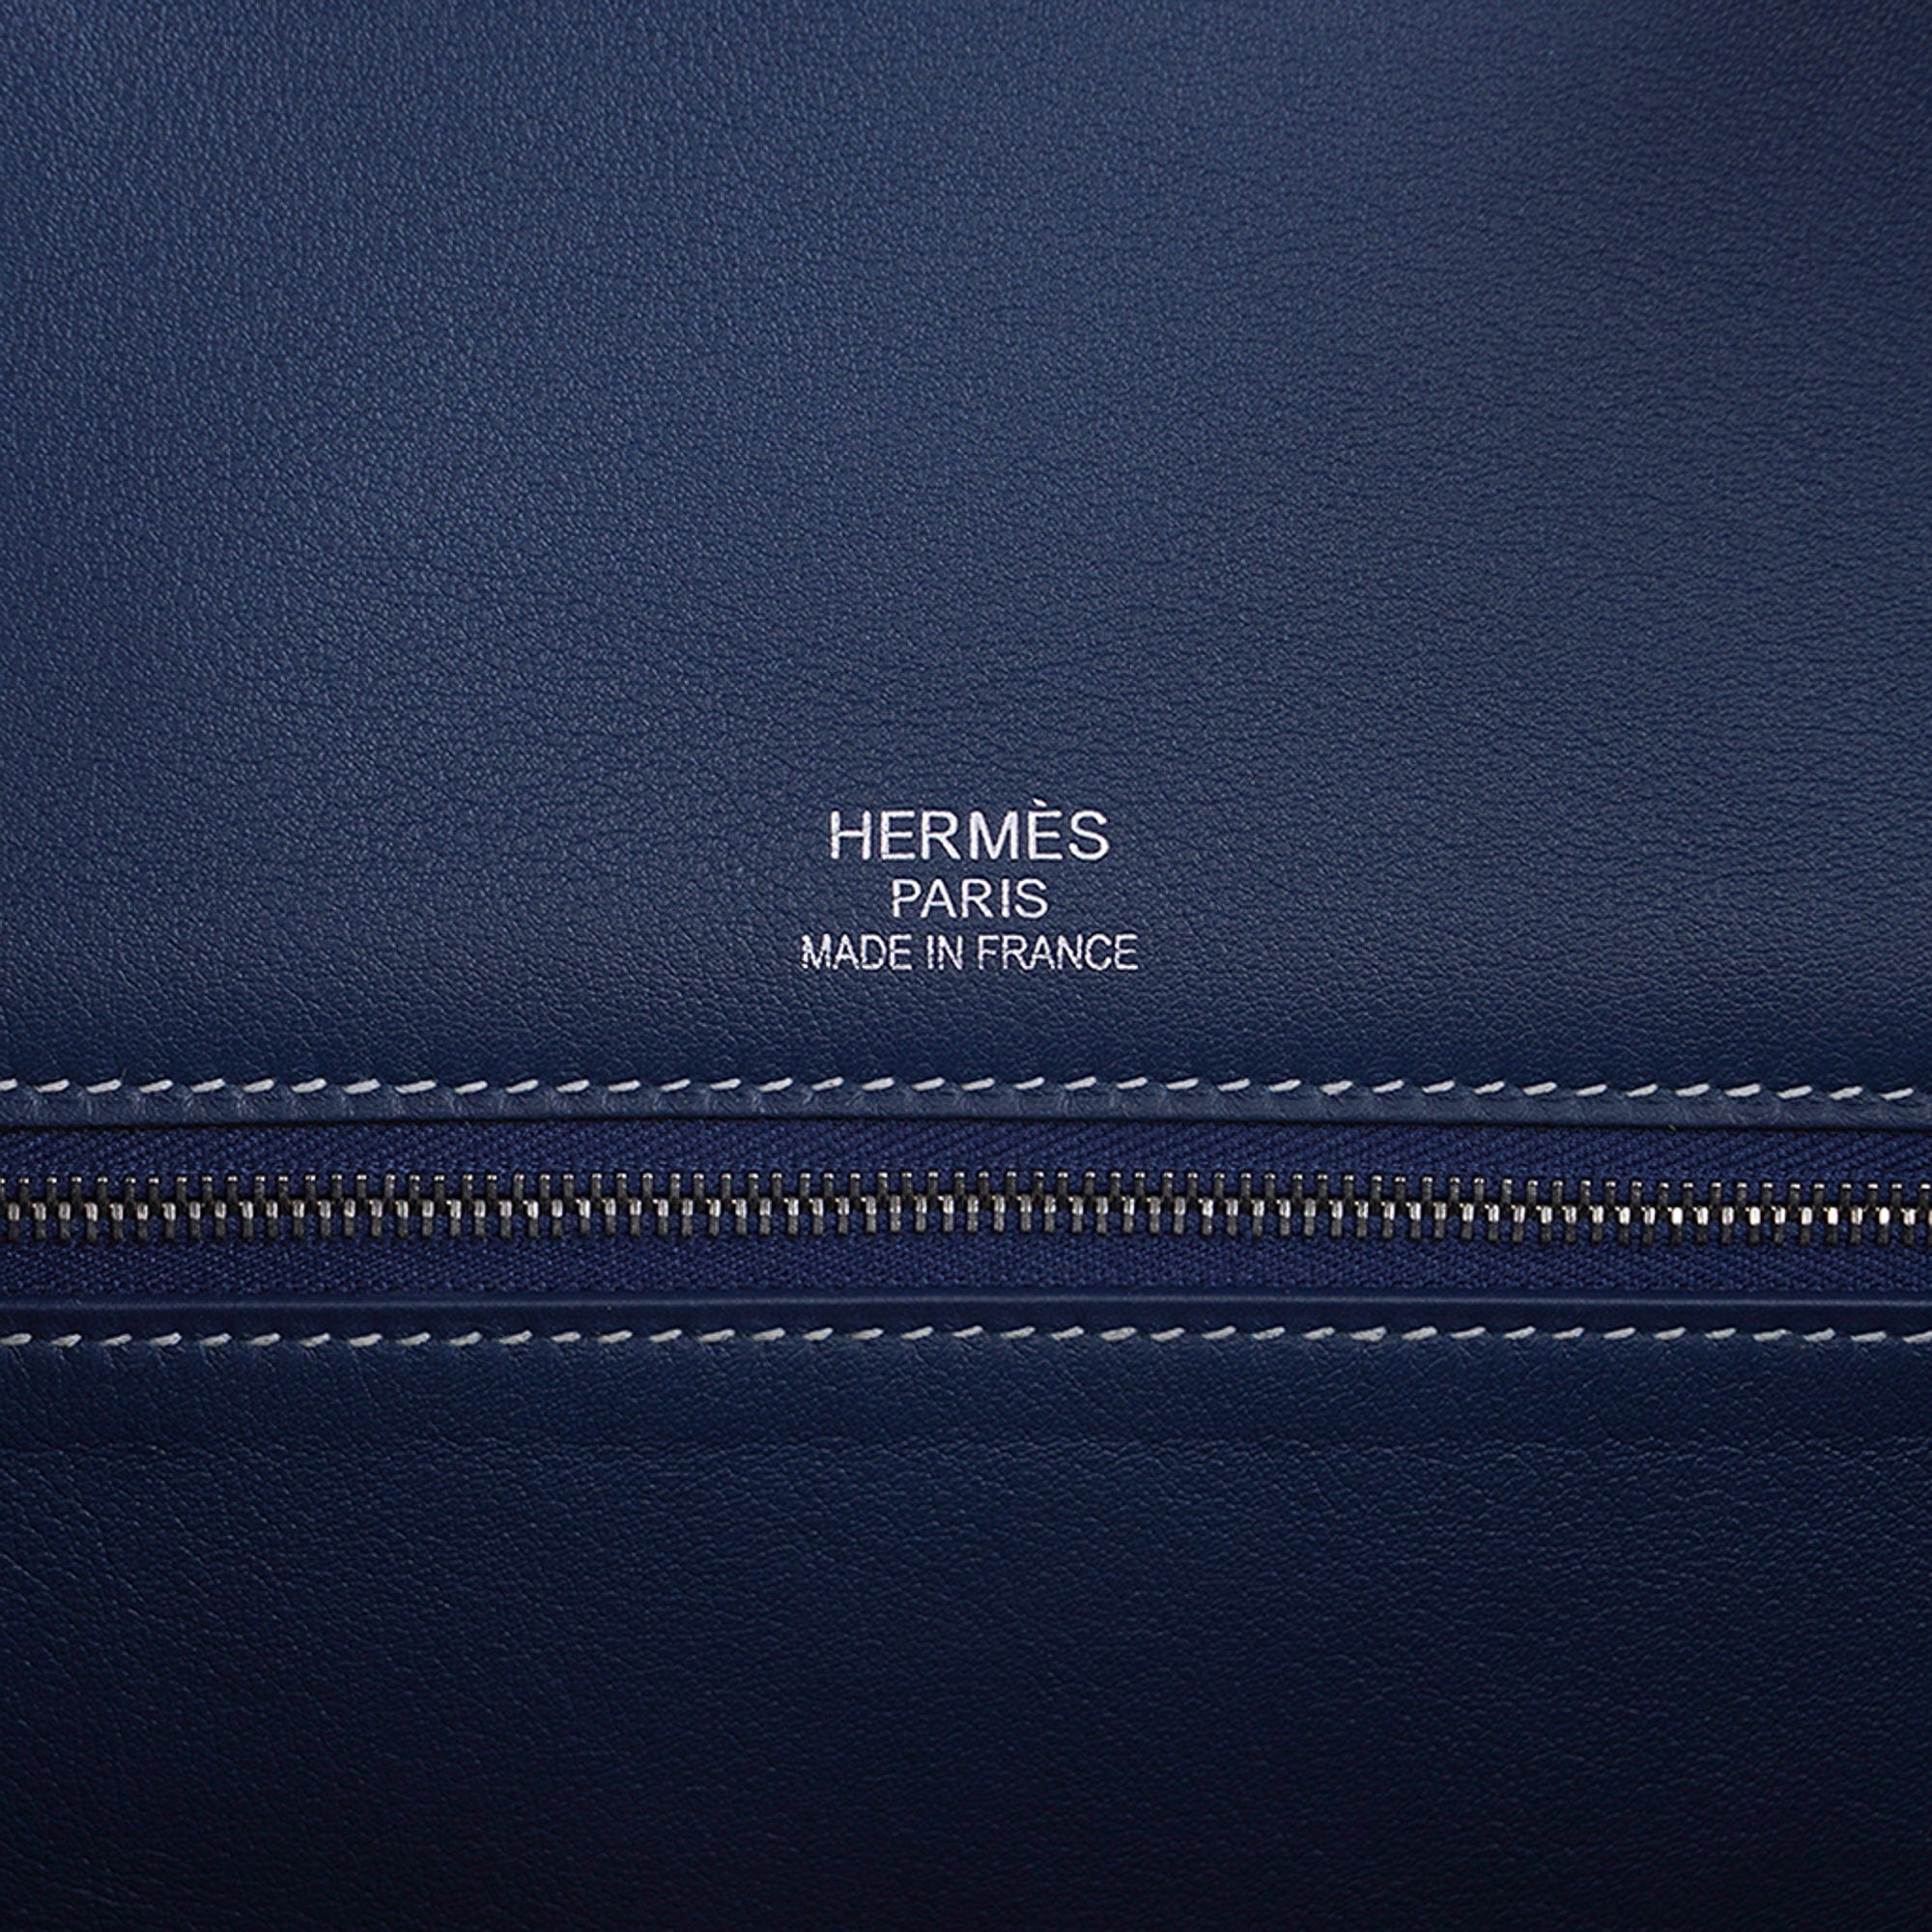 Hermes Birkin 40 Bag Ghillies Blue de Prusse w/ Blue Toile Limited Edition